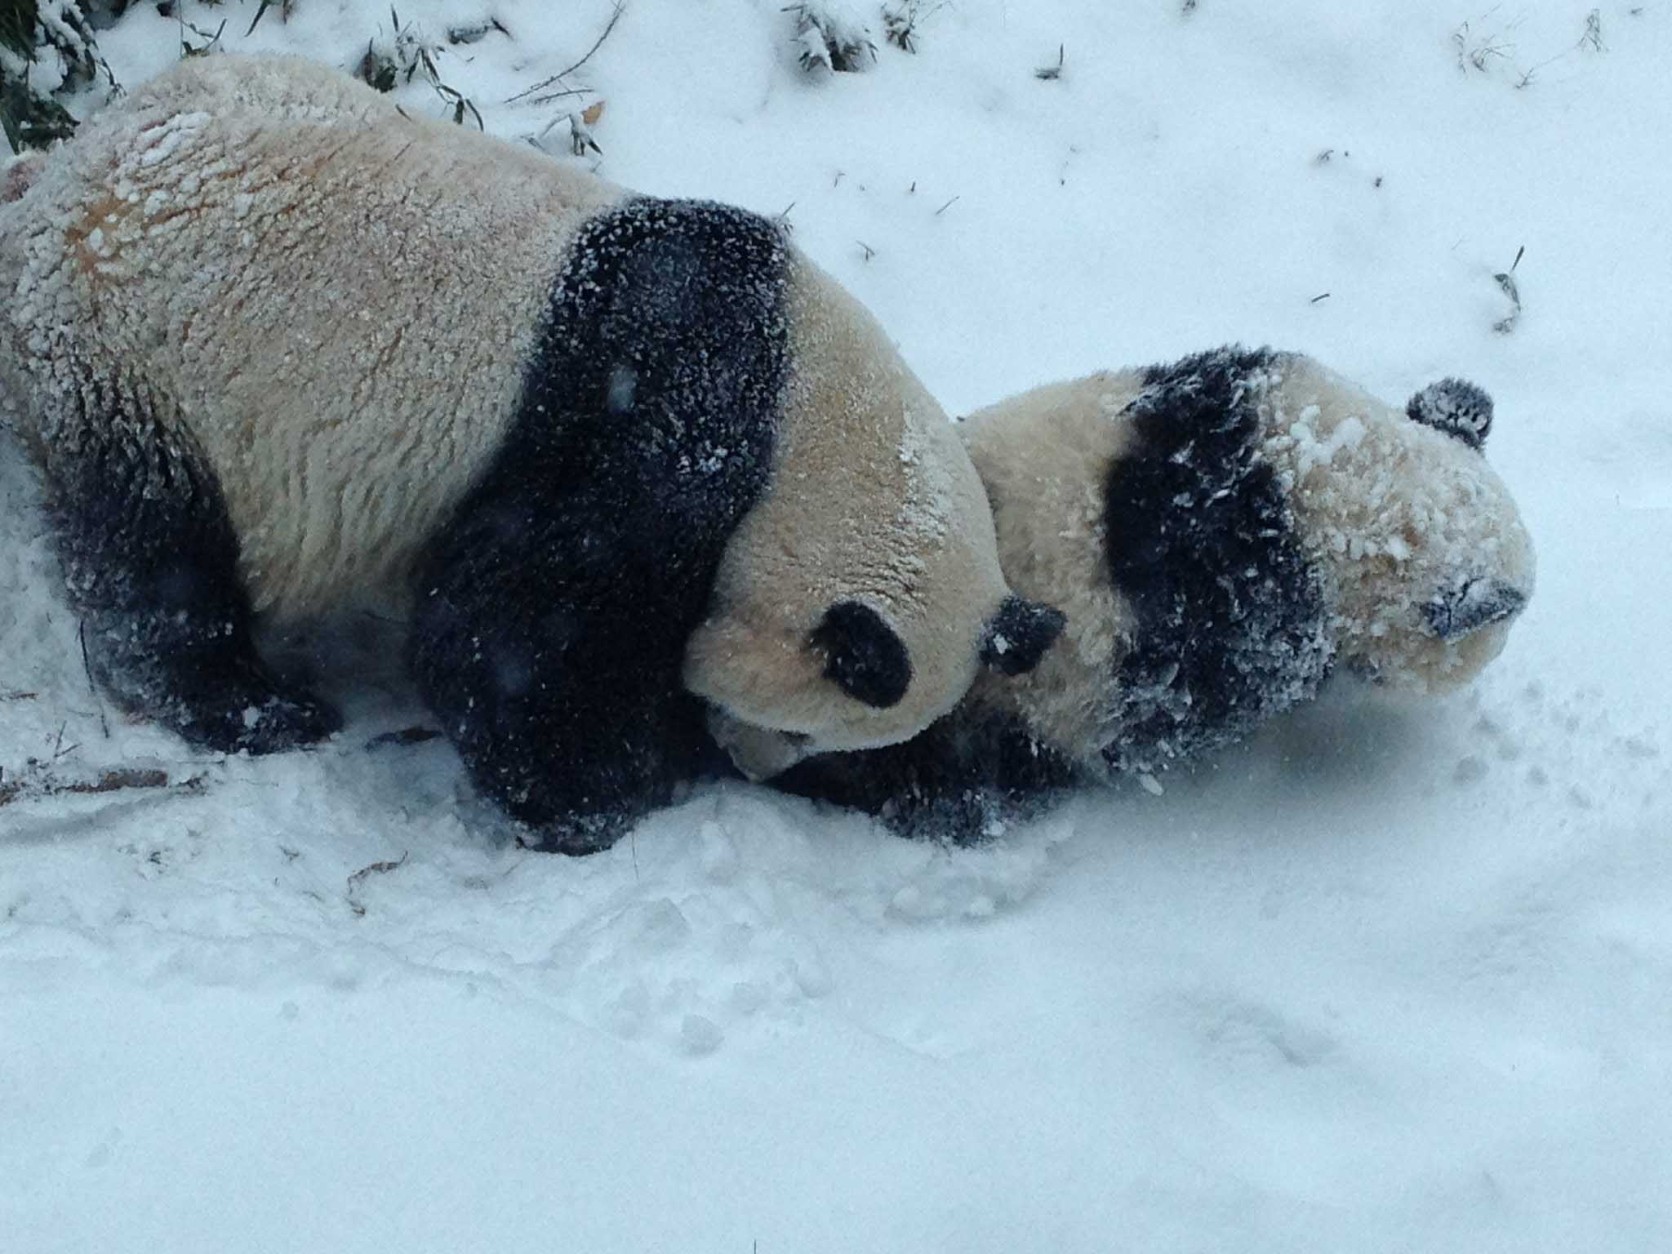 Bao Bao and Mei Xiang explored the snow in January.  (Photo: Devin Murphy/Smithsonian's National Zoo)